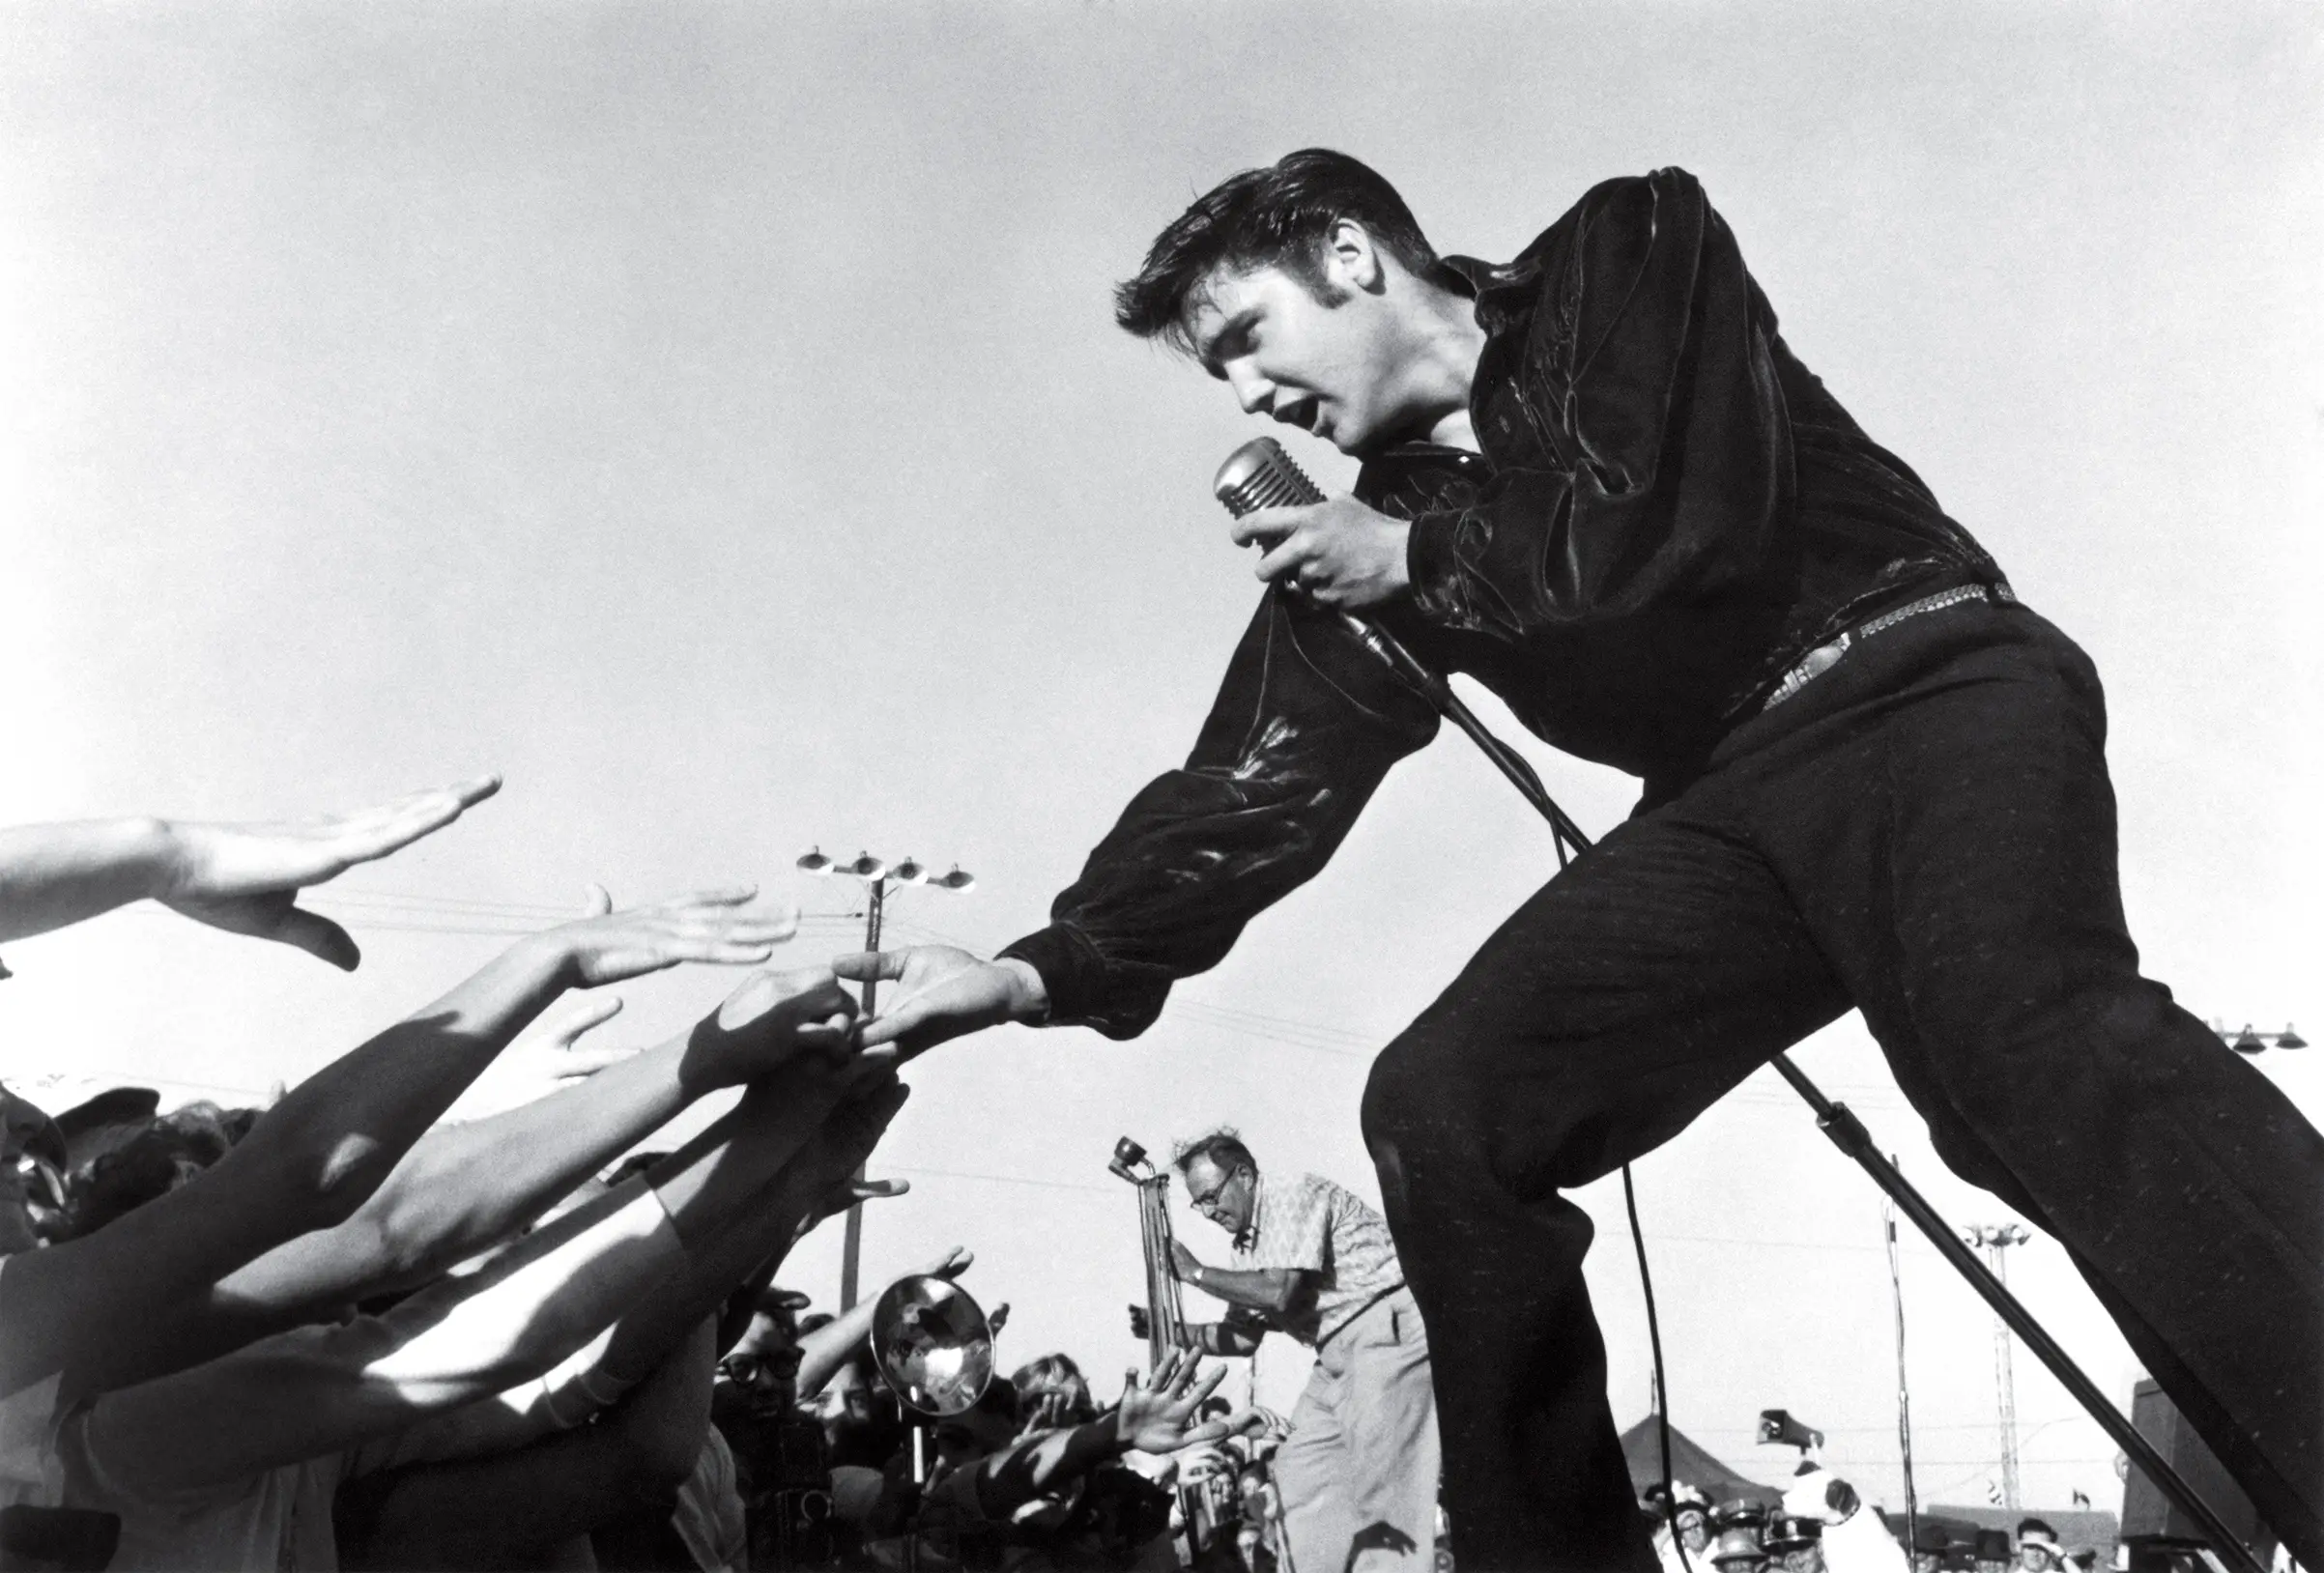 Elvis Presley's Impact on Music